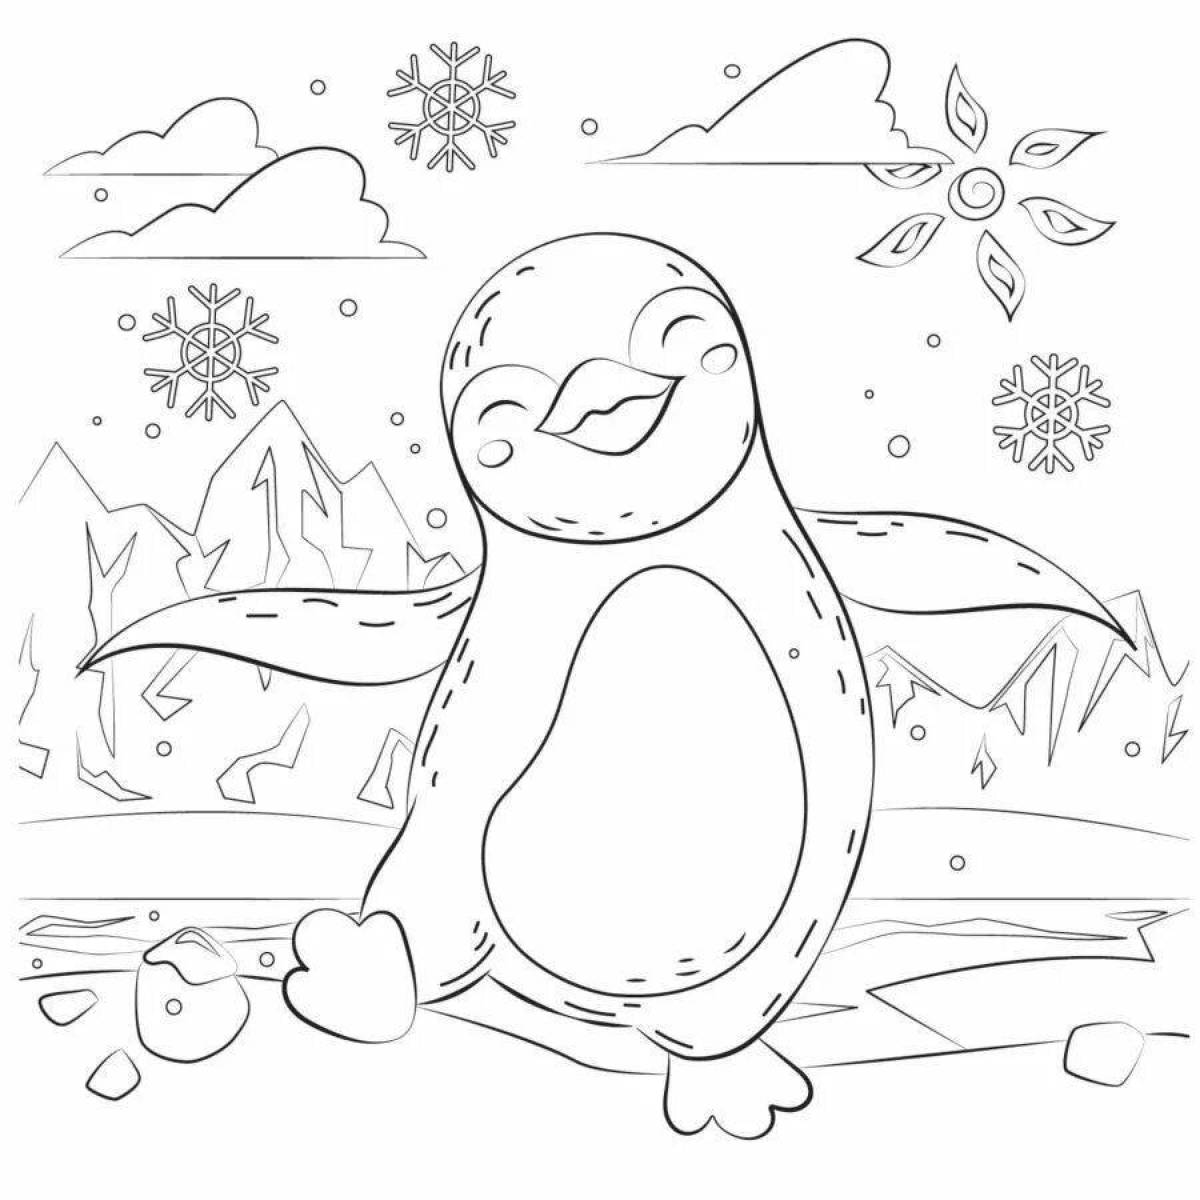 Sweet penguin drawing for kids